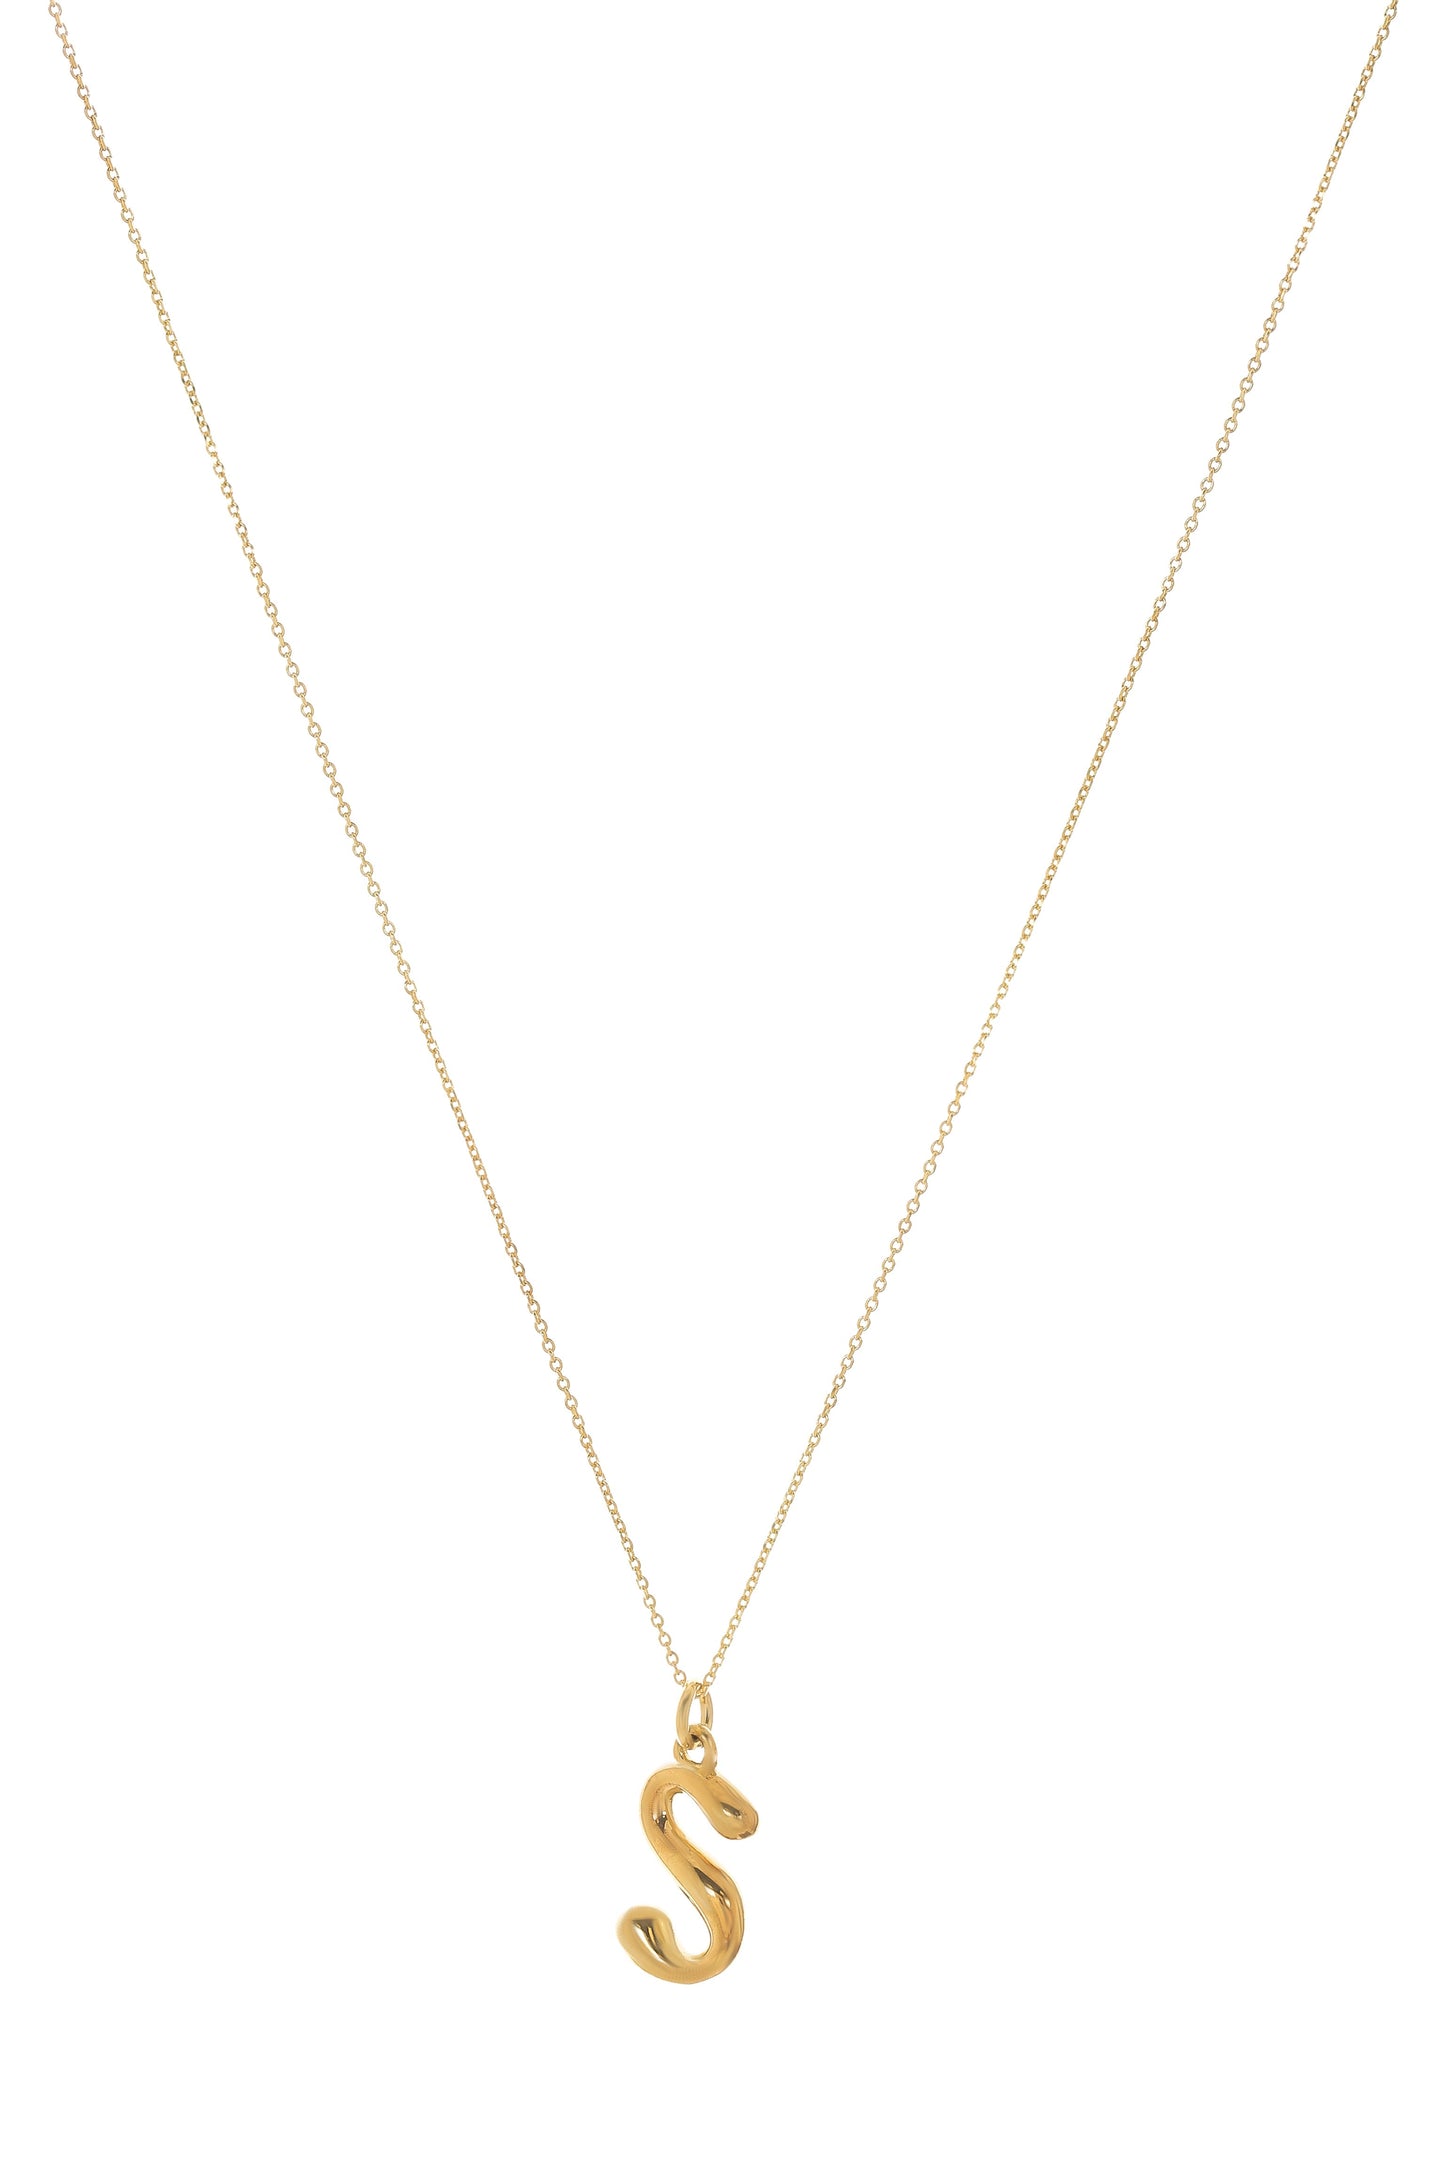 BONVO-Letter S Pendant Necklace-GOLD